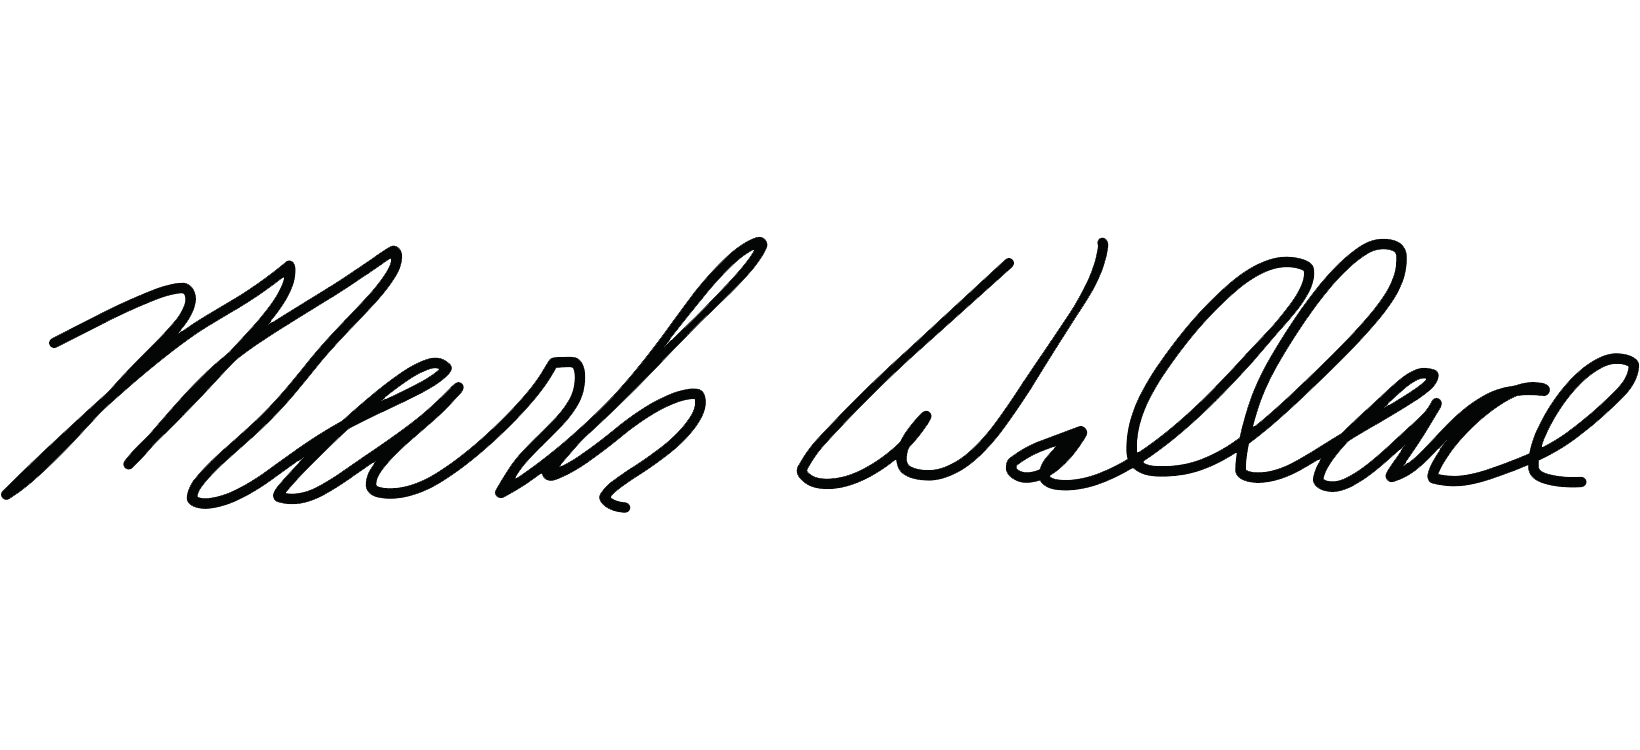 Signature of Mark Wallace